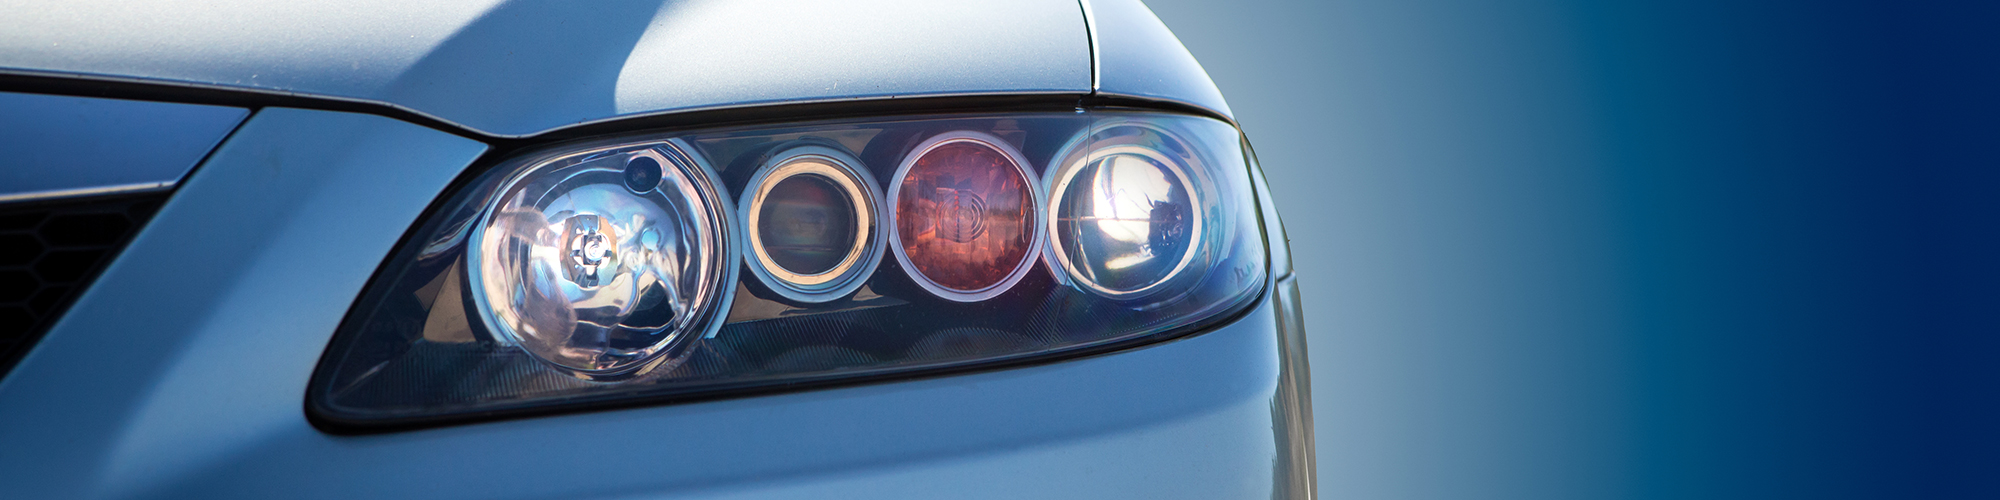 Car Headlight Closeup